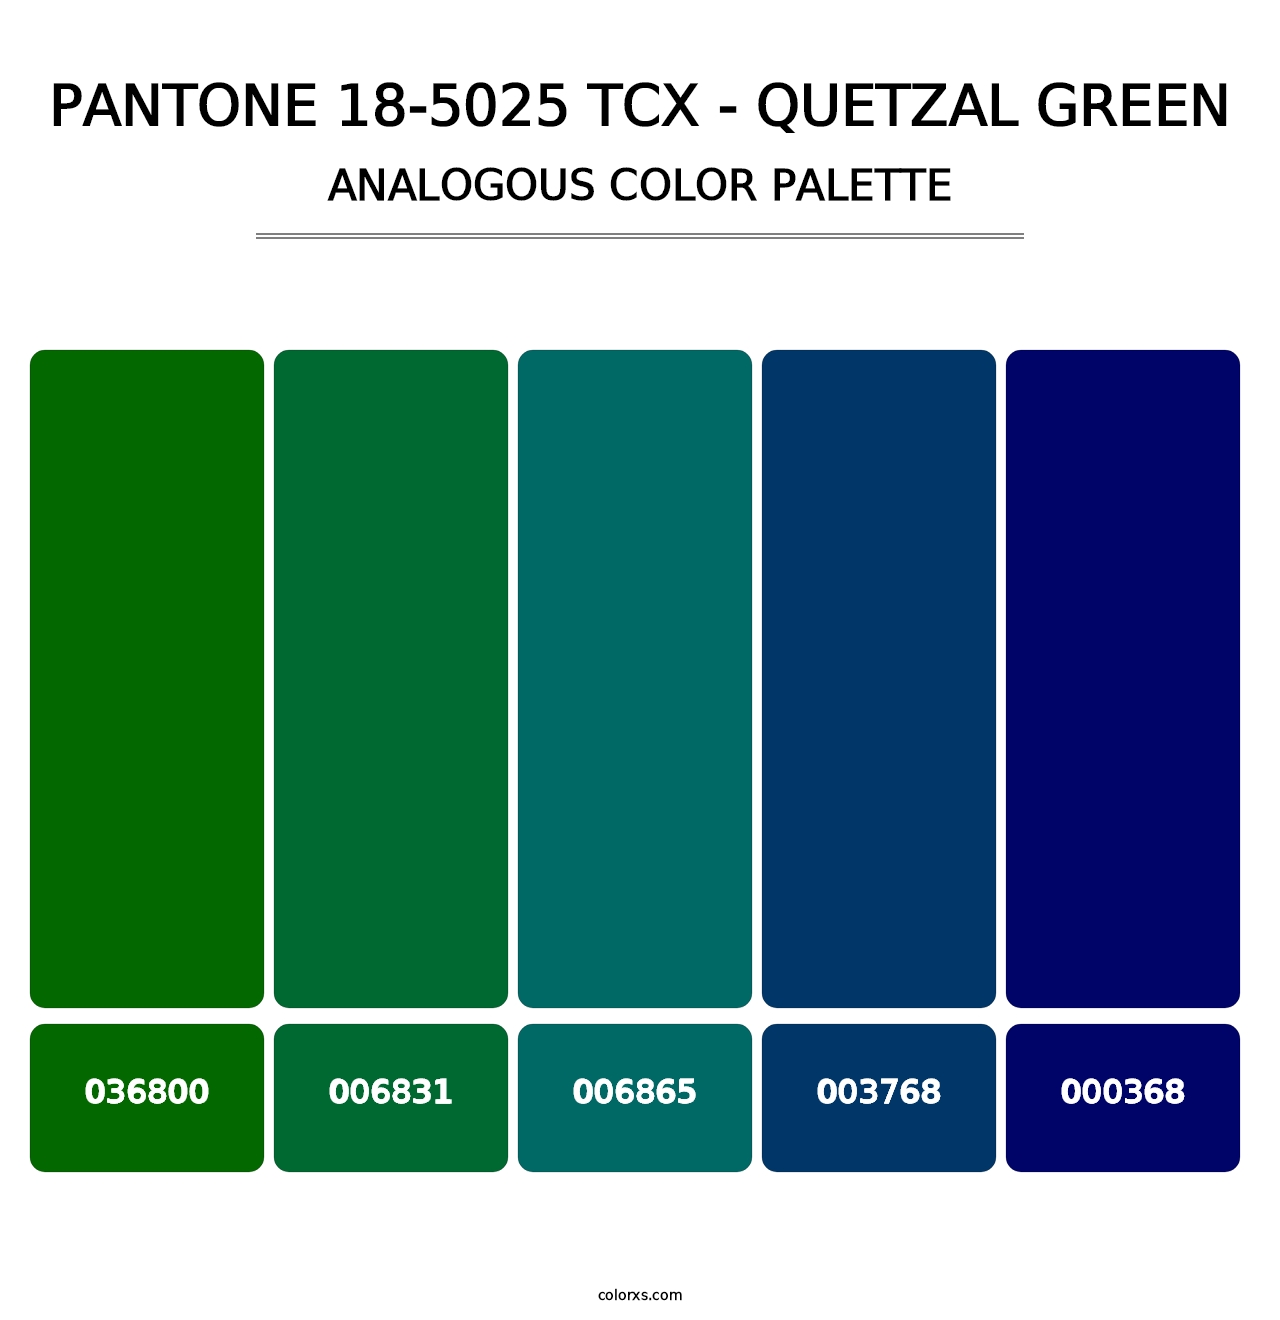 PANTONE 18-5025 TCX - Quetzal Green - Analogous Color Palette